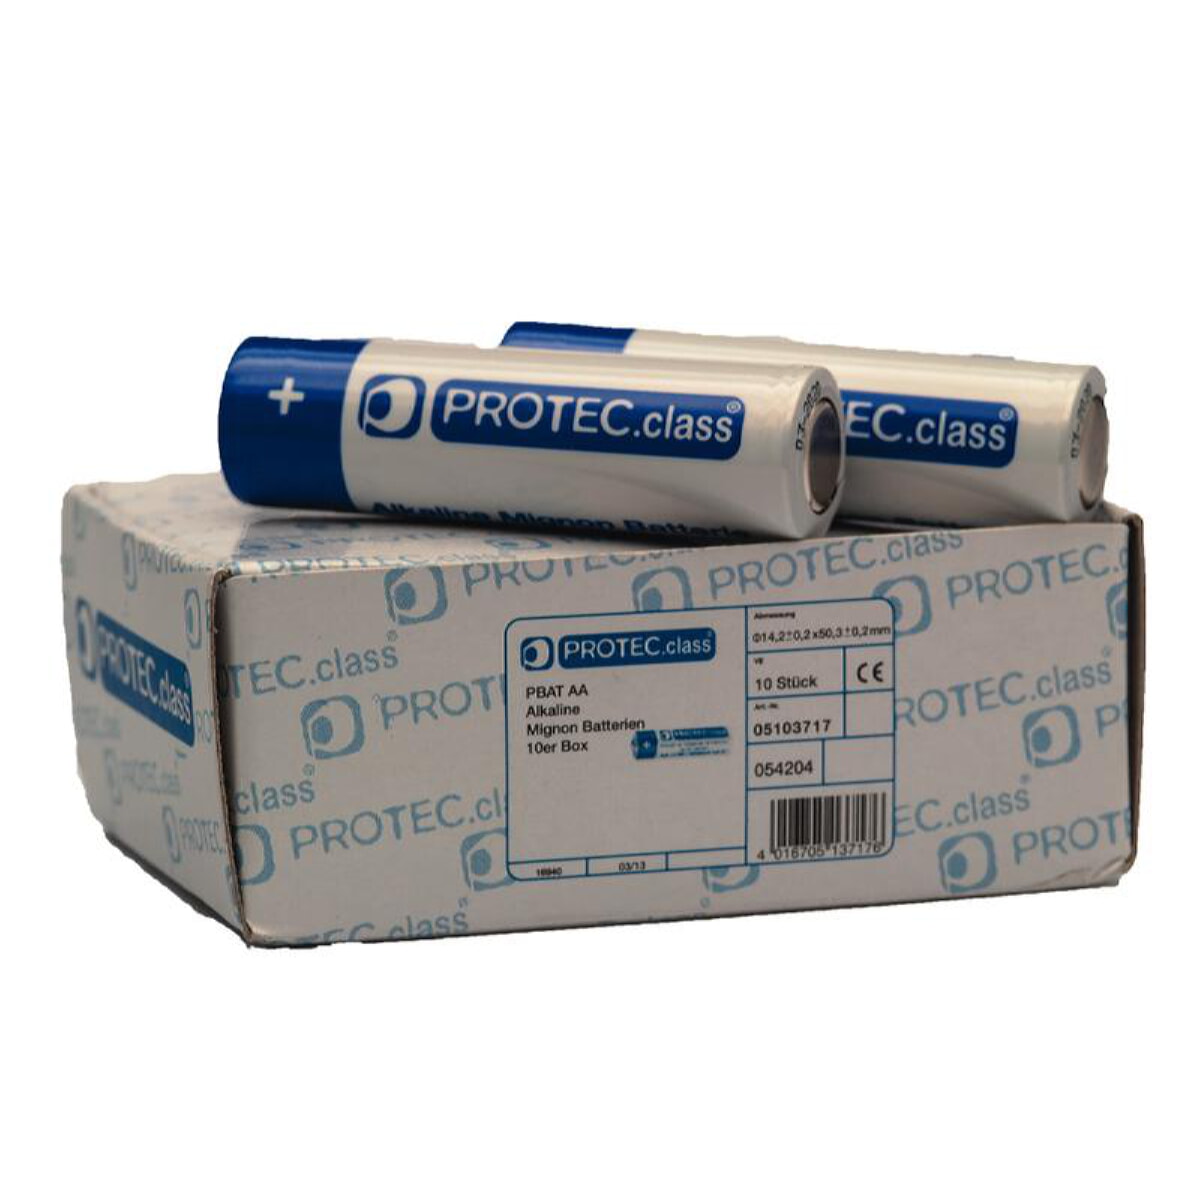 PROTEC.class Batterie PBAT AA Mignon 10Box